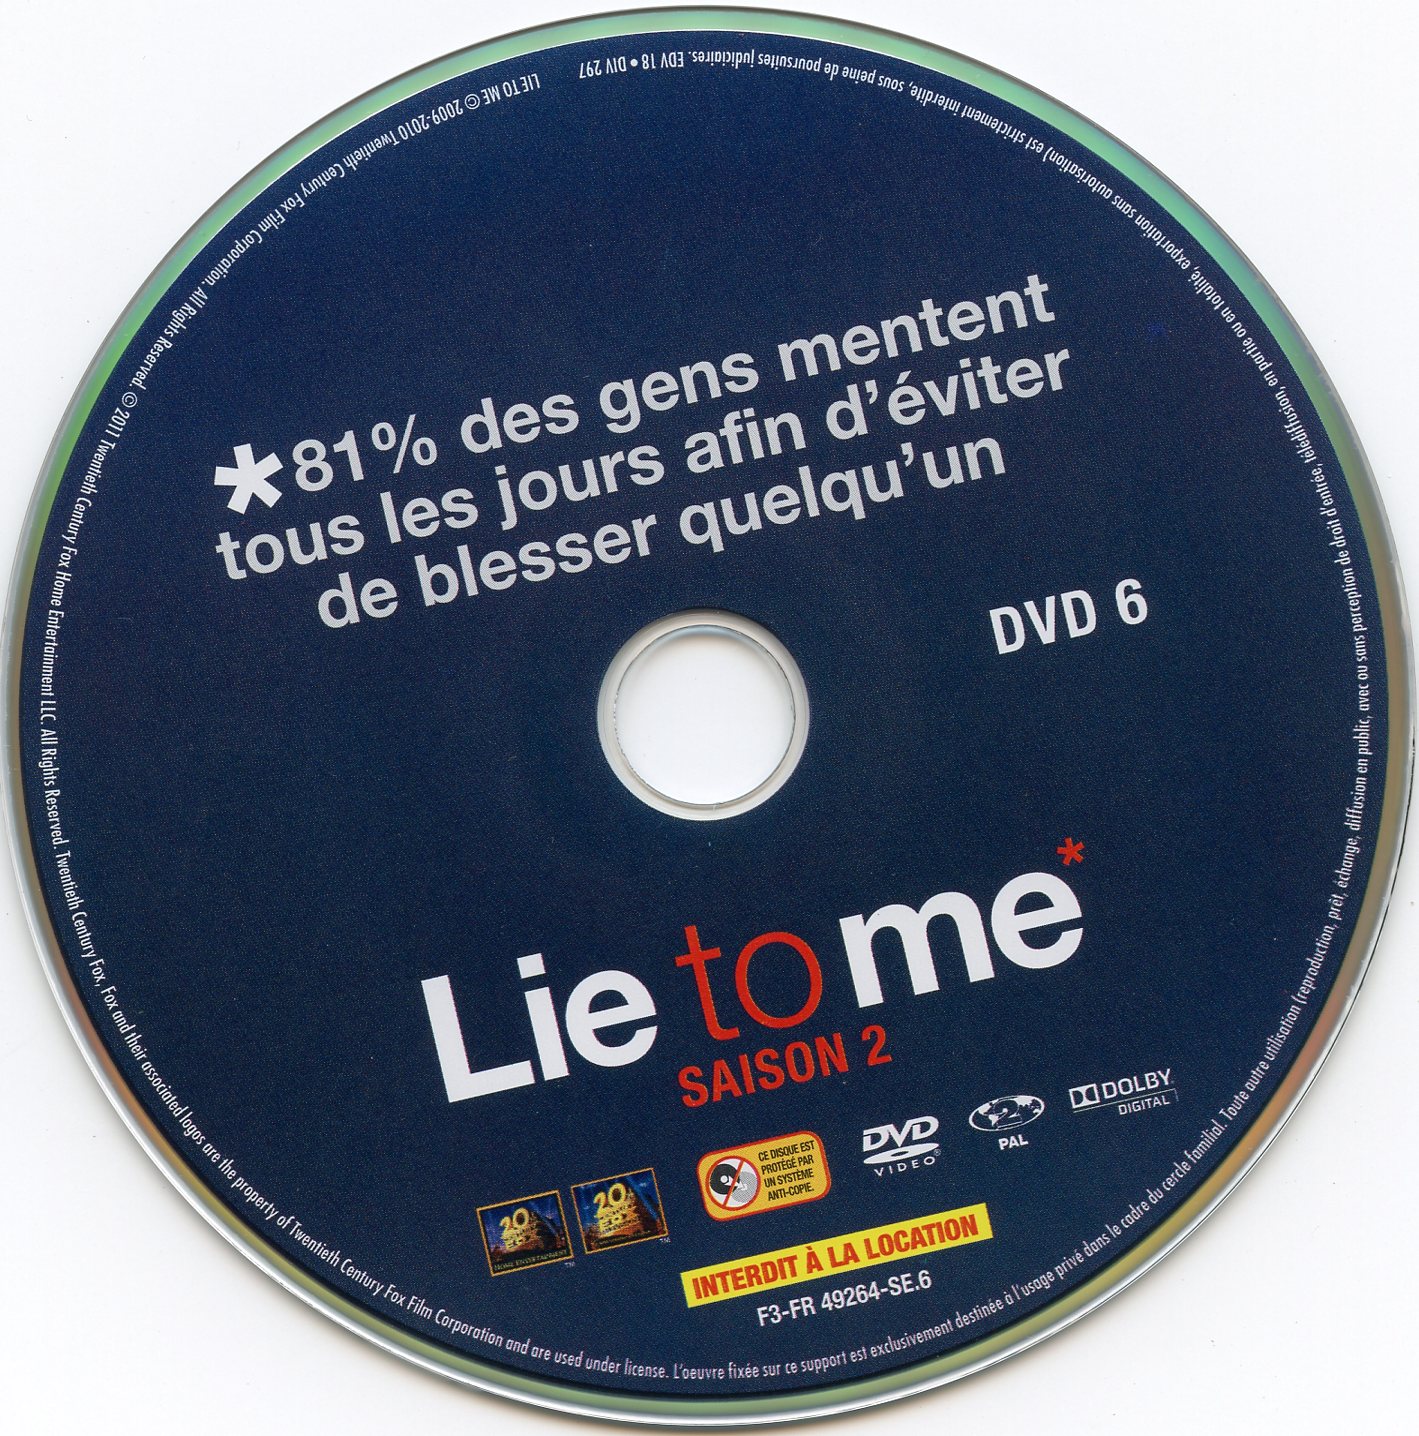 Lie to me Saison 2 DVD 6